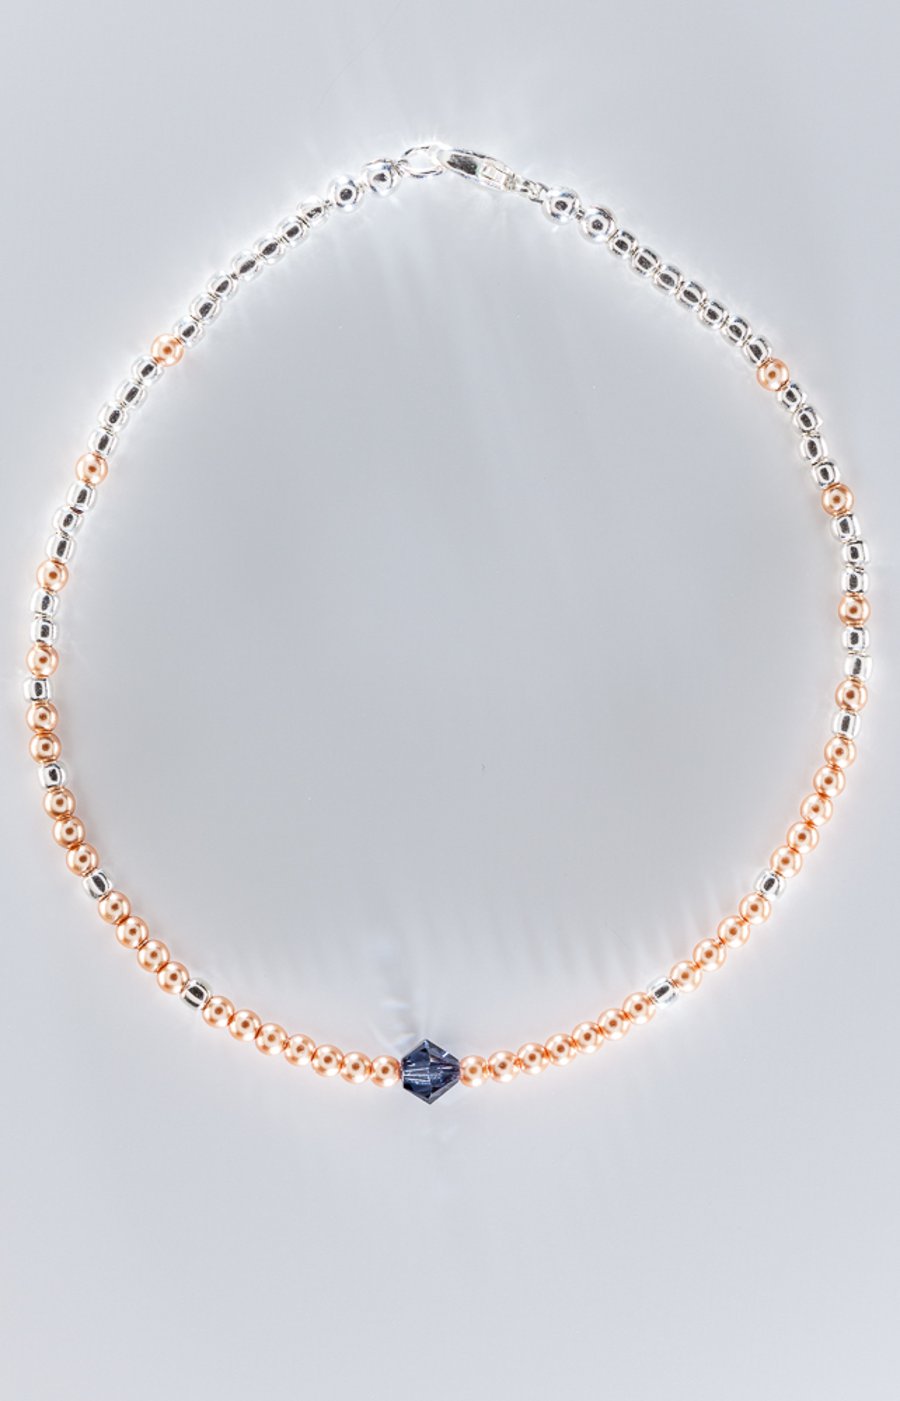 Sale-dainty sterling silver Swarovski glass pearl bracelet symmetric pattern 